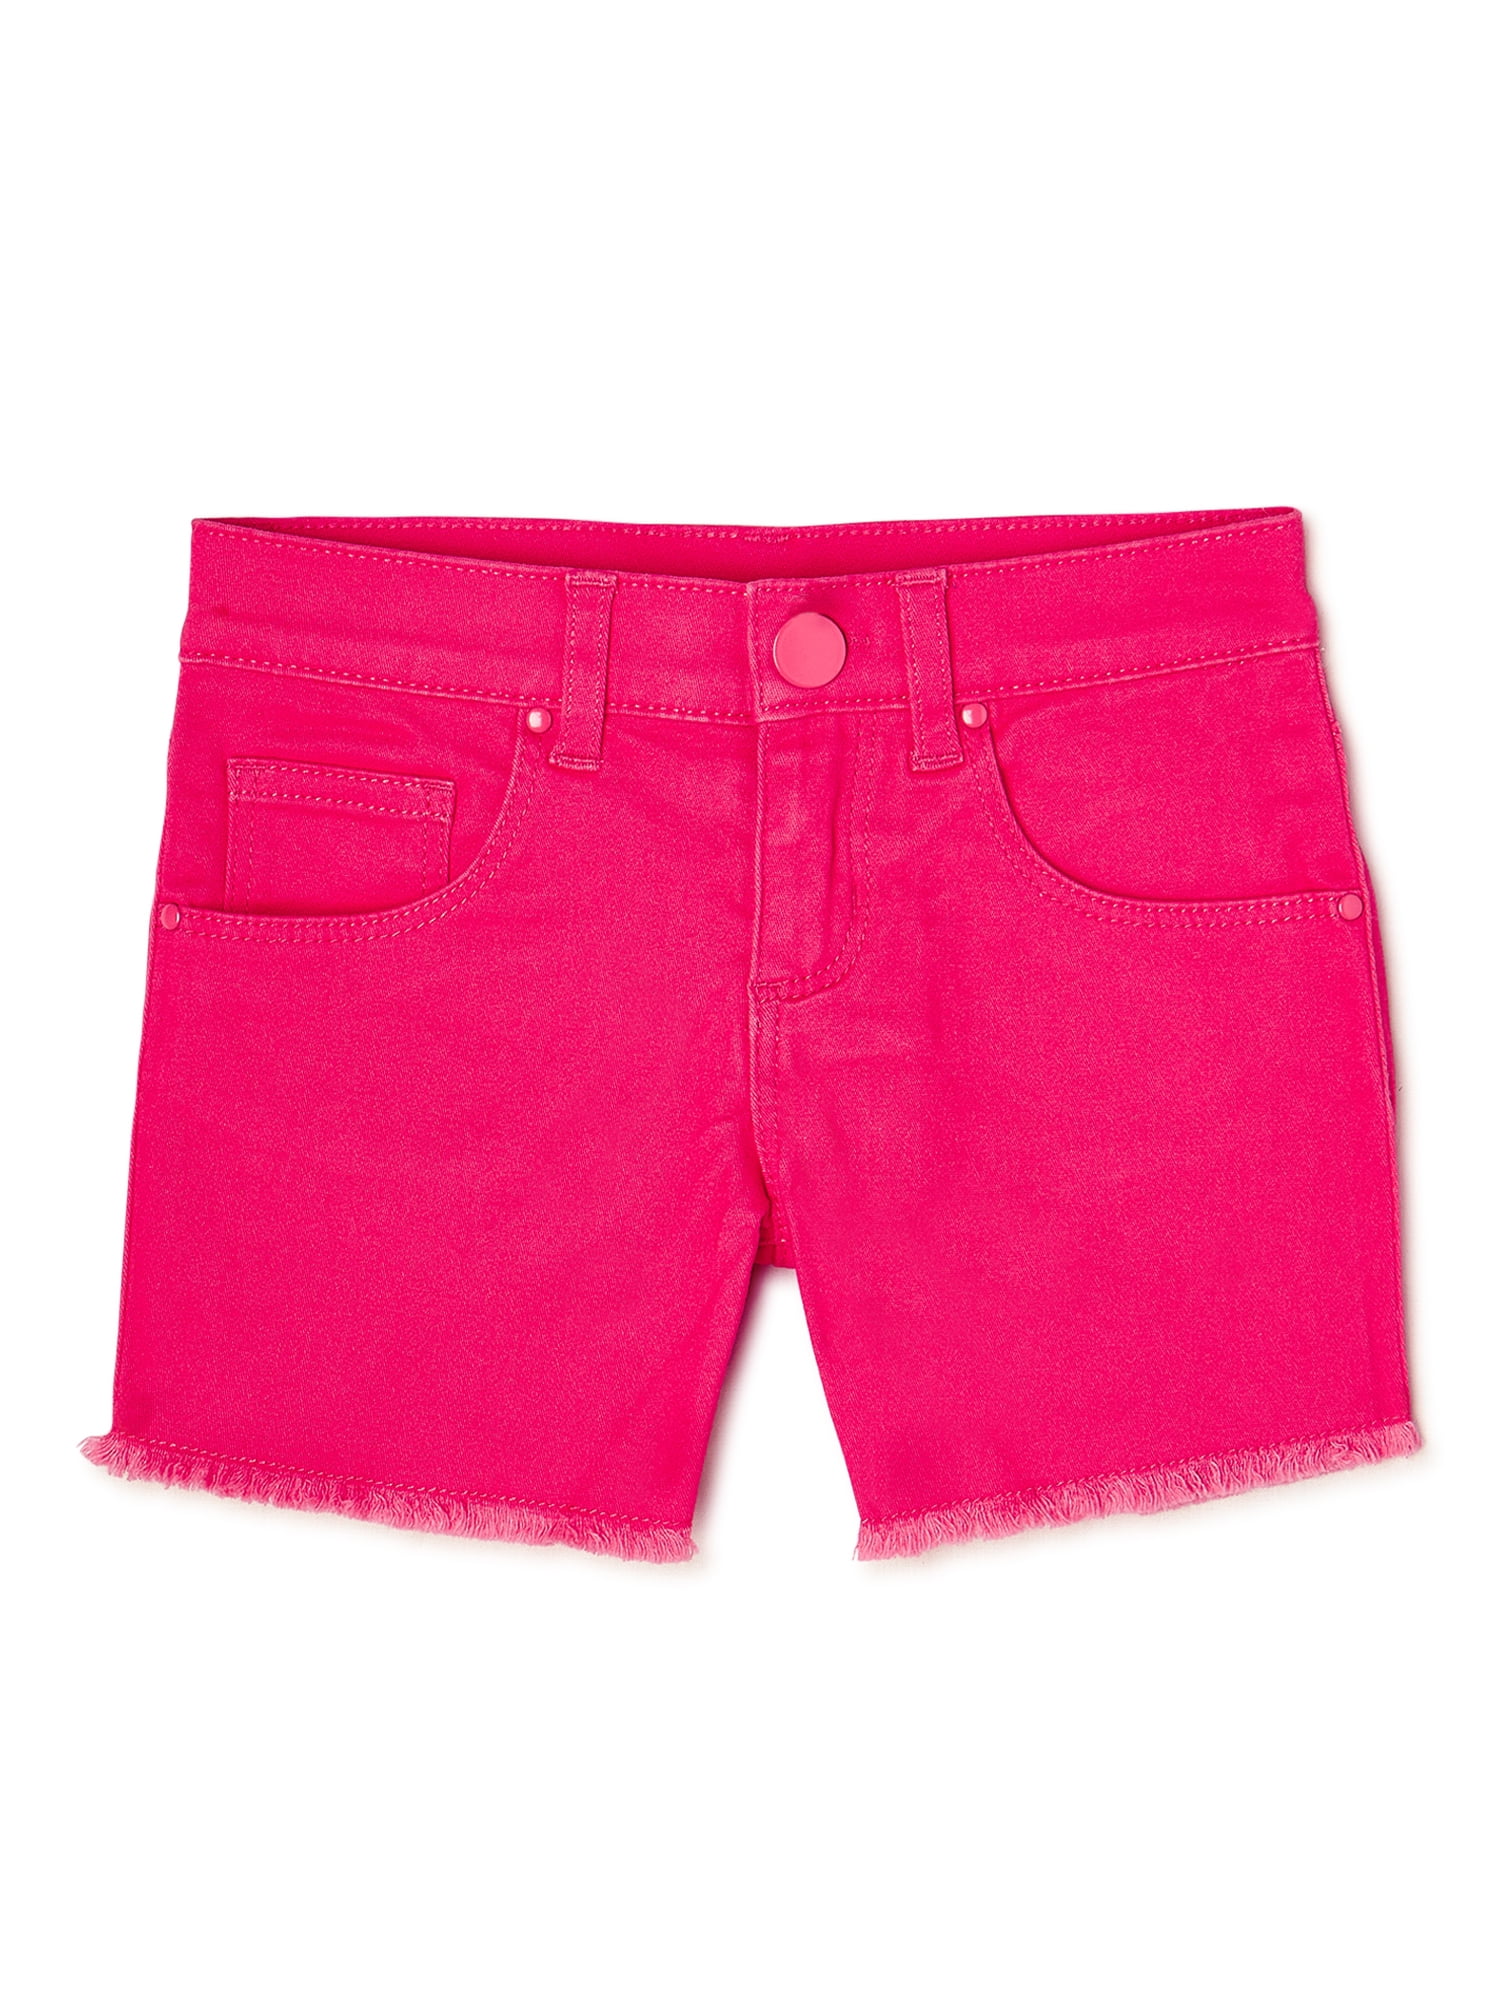 365 Kids From Garanimals Girls Twill Shorts, Sizes 4-10 - Walmart.com